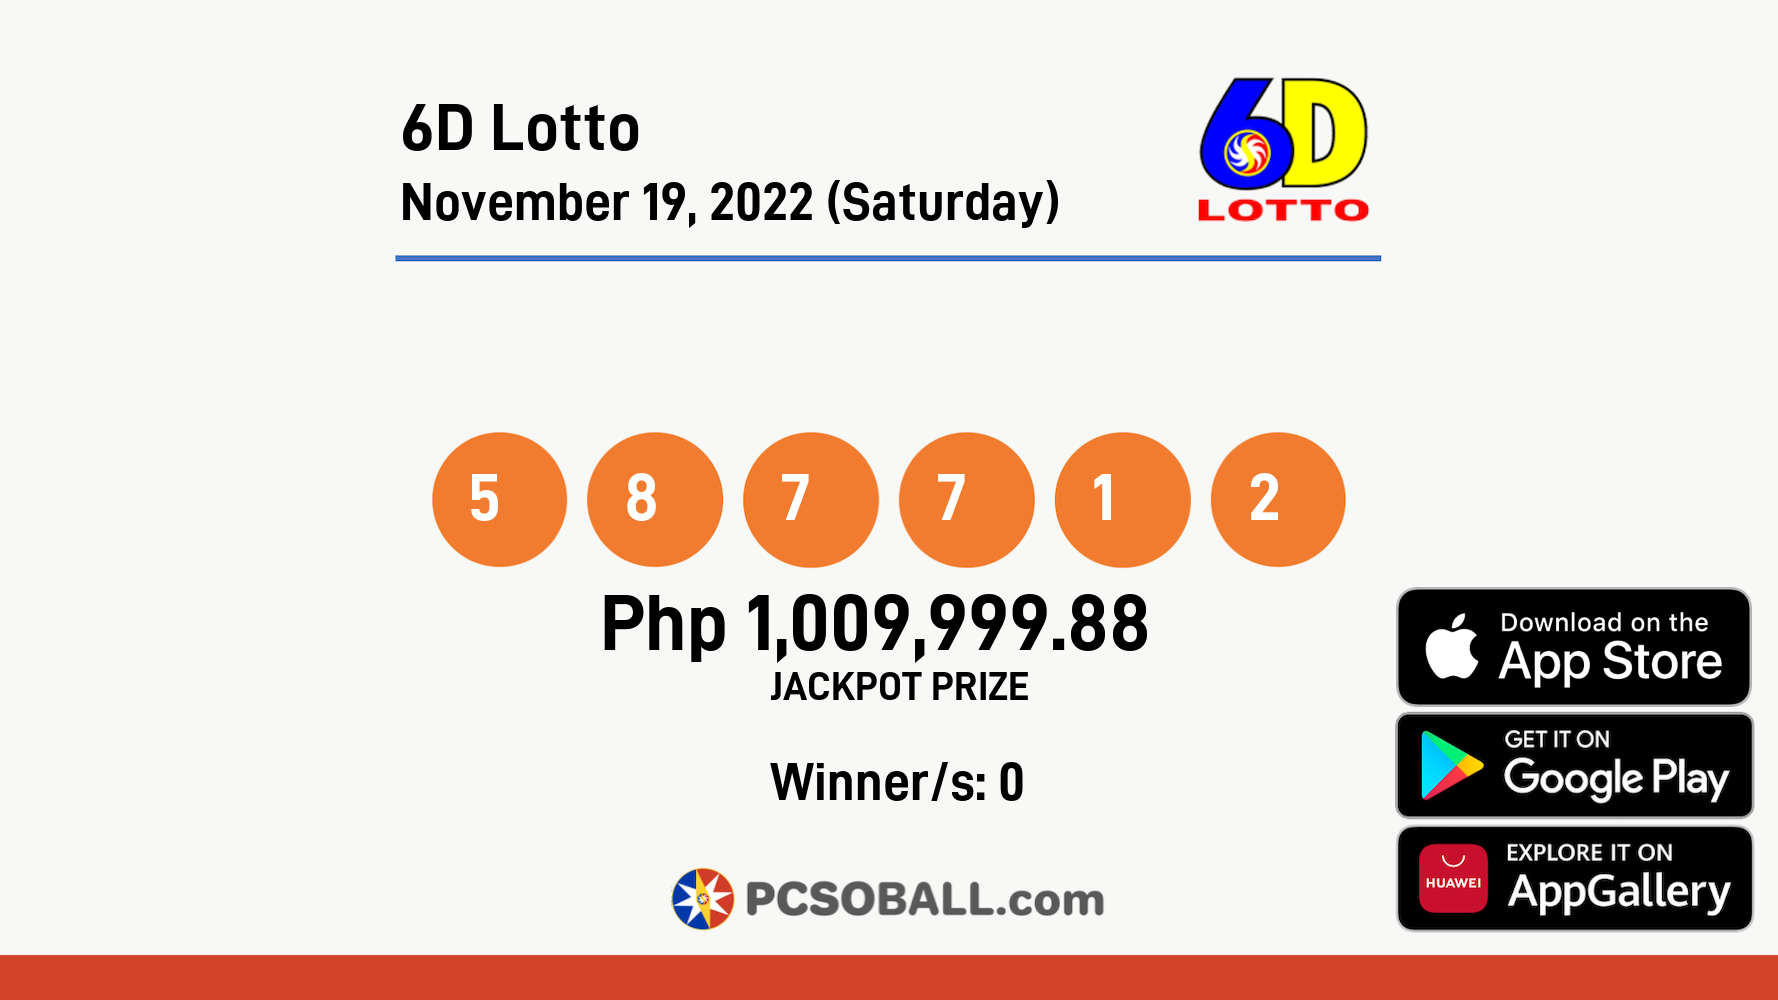 6D Lotto November 19, 2022 (Saturday) Result